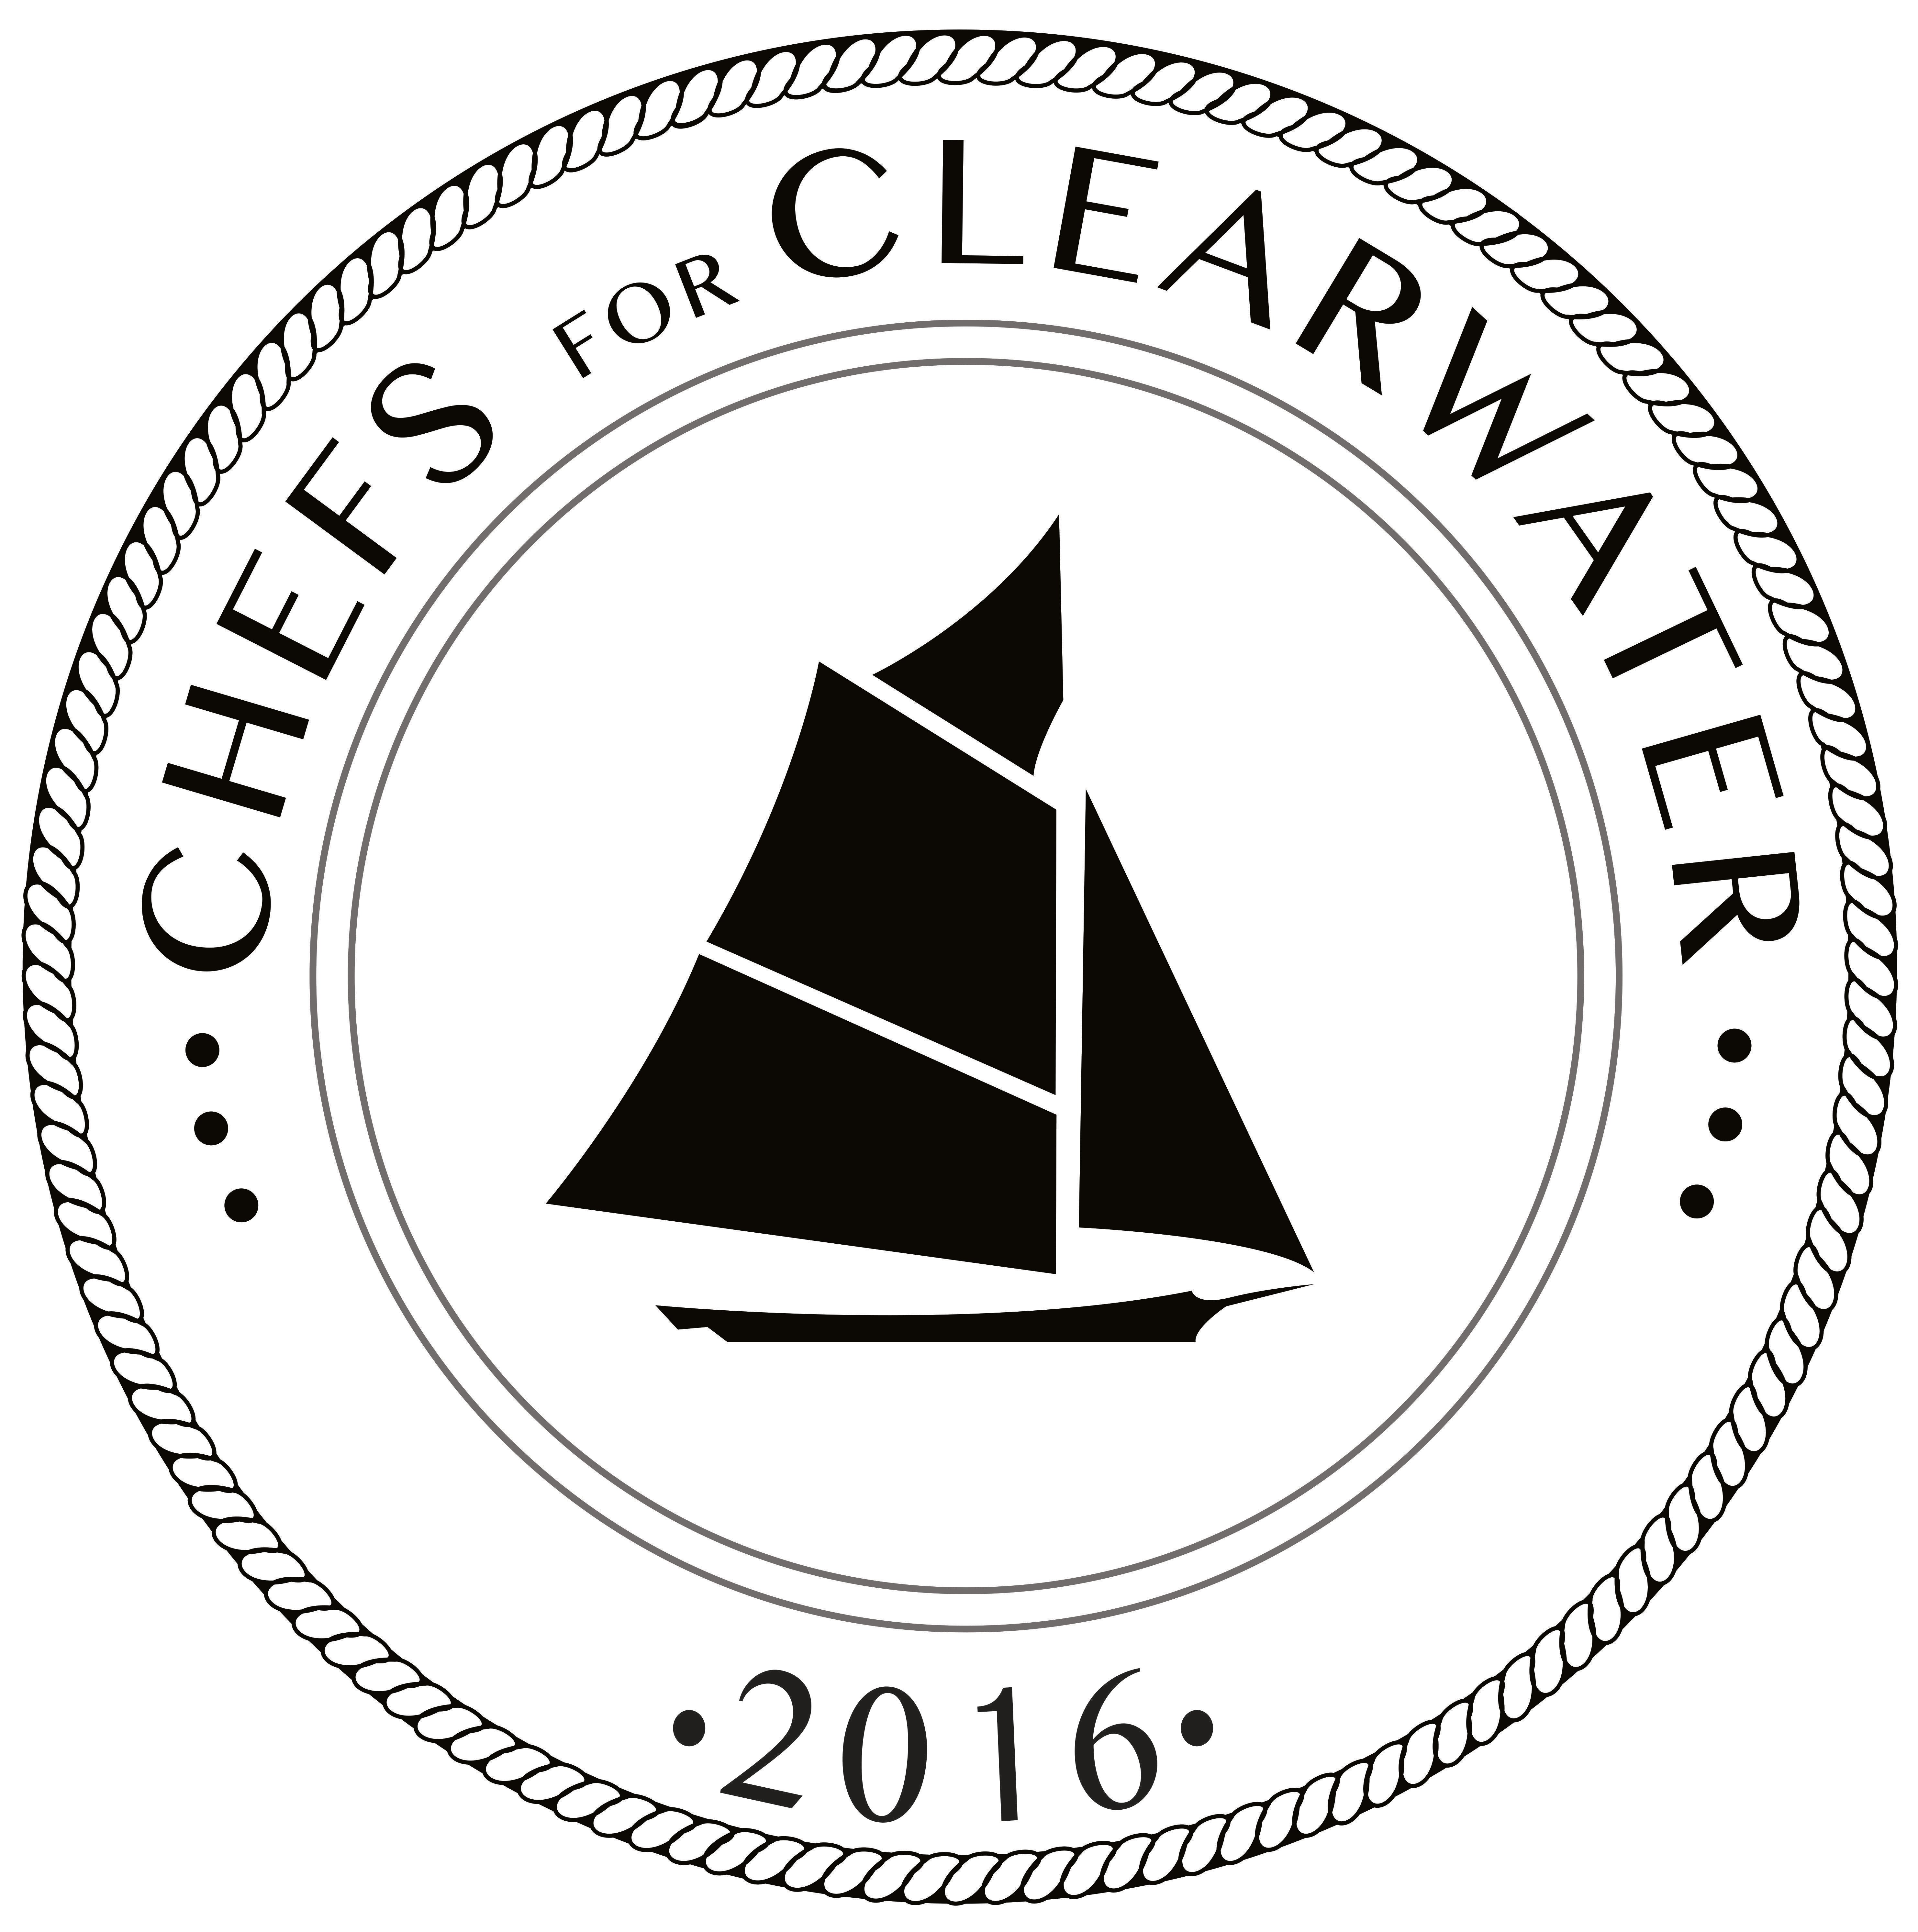 Black Sailboat Logo - final logo black revised River Sloop Clearwater